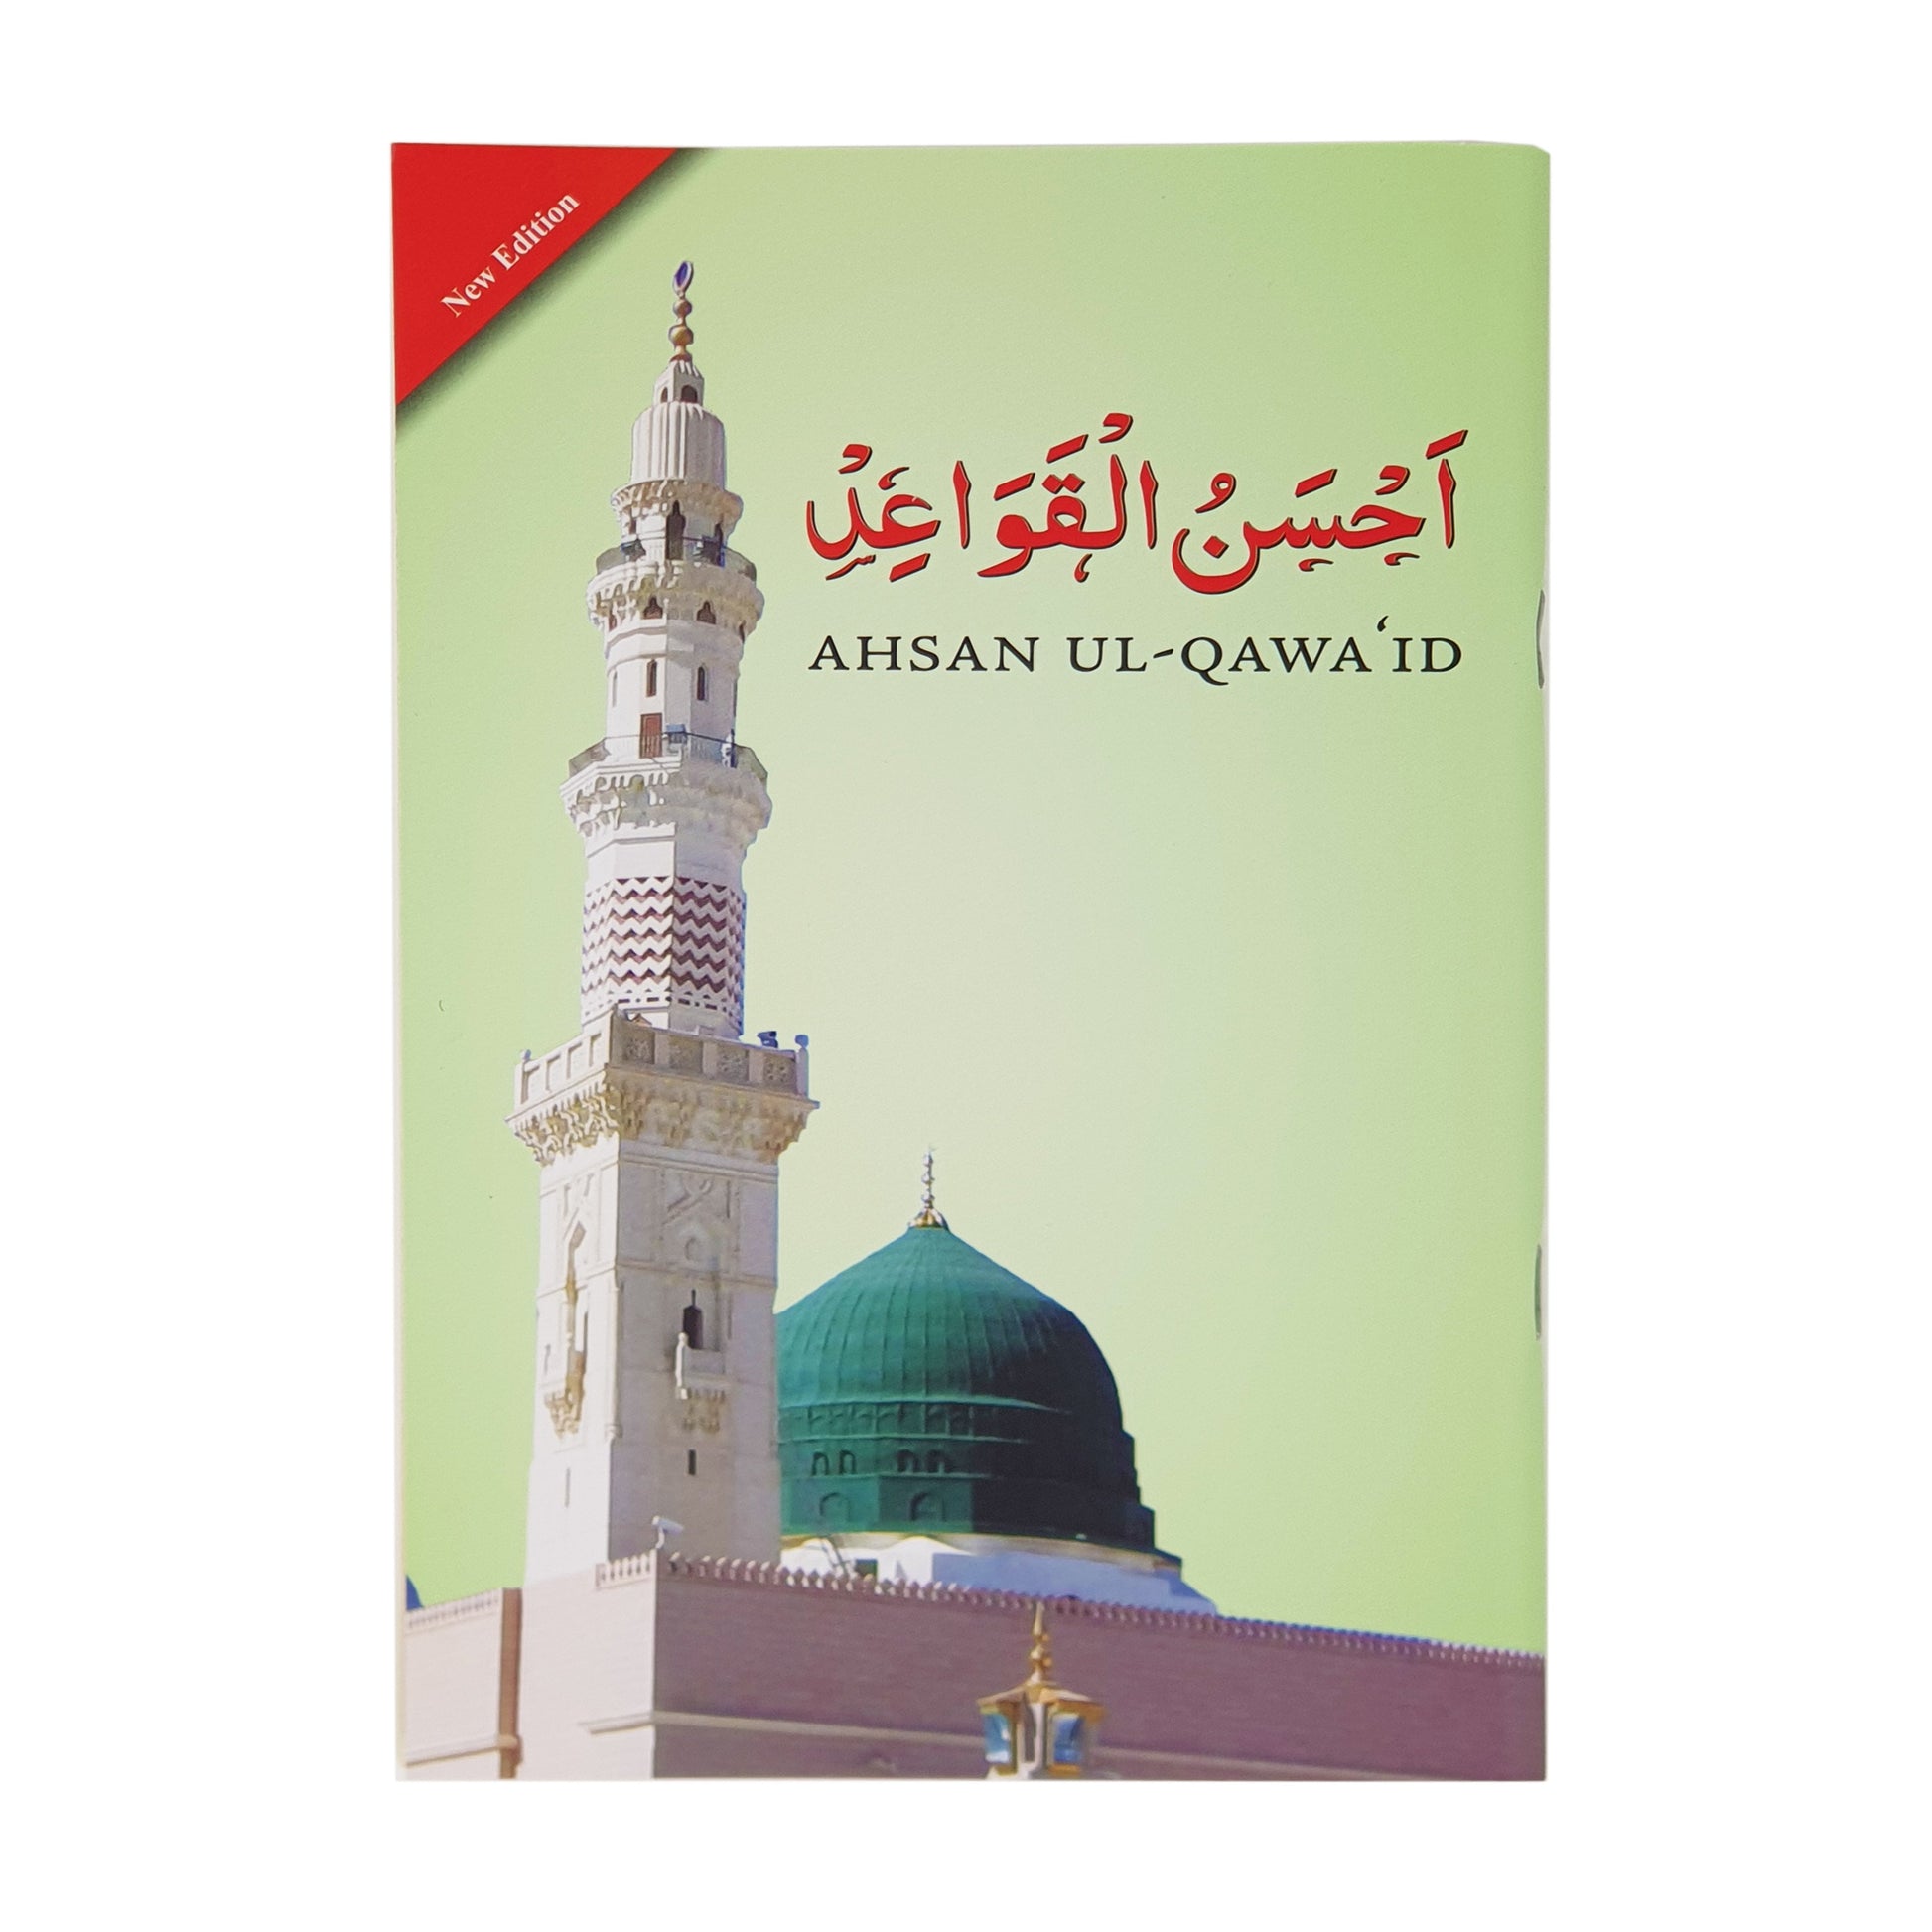 Ahsan al-qawaid Large